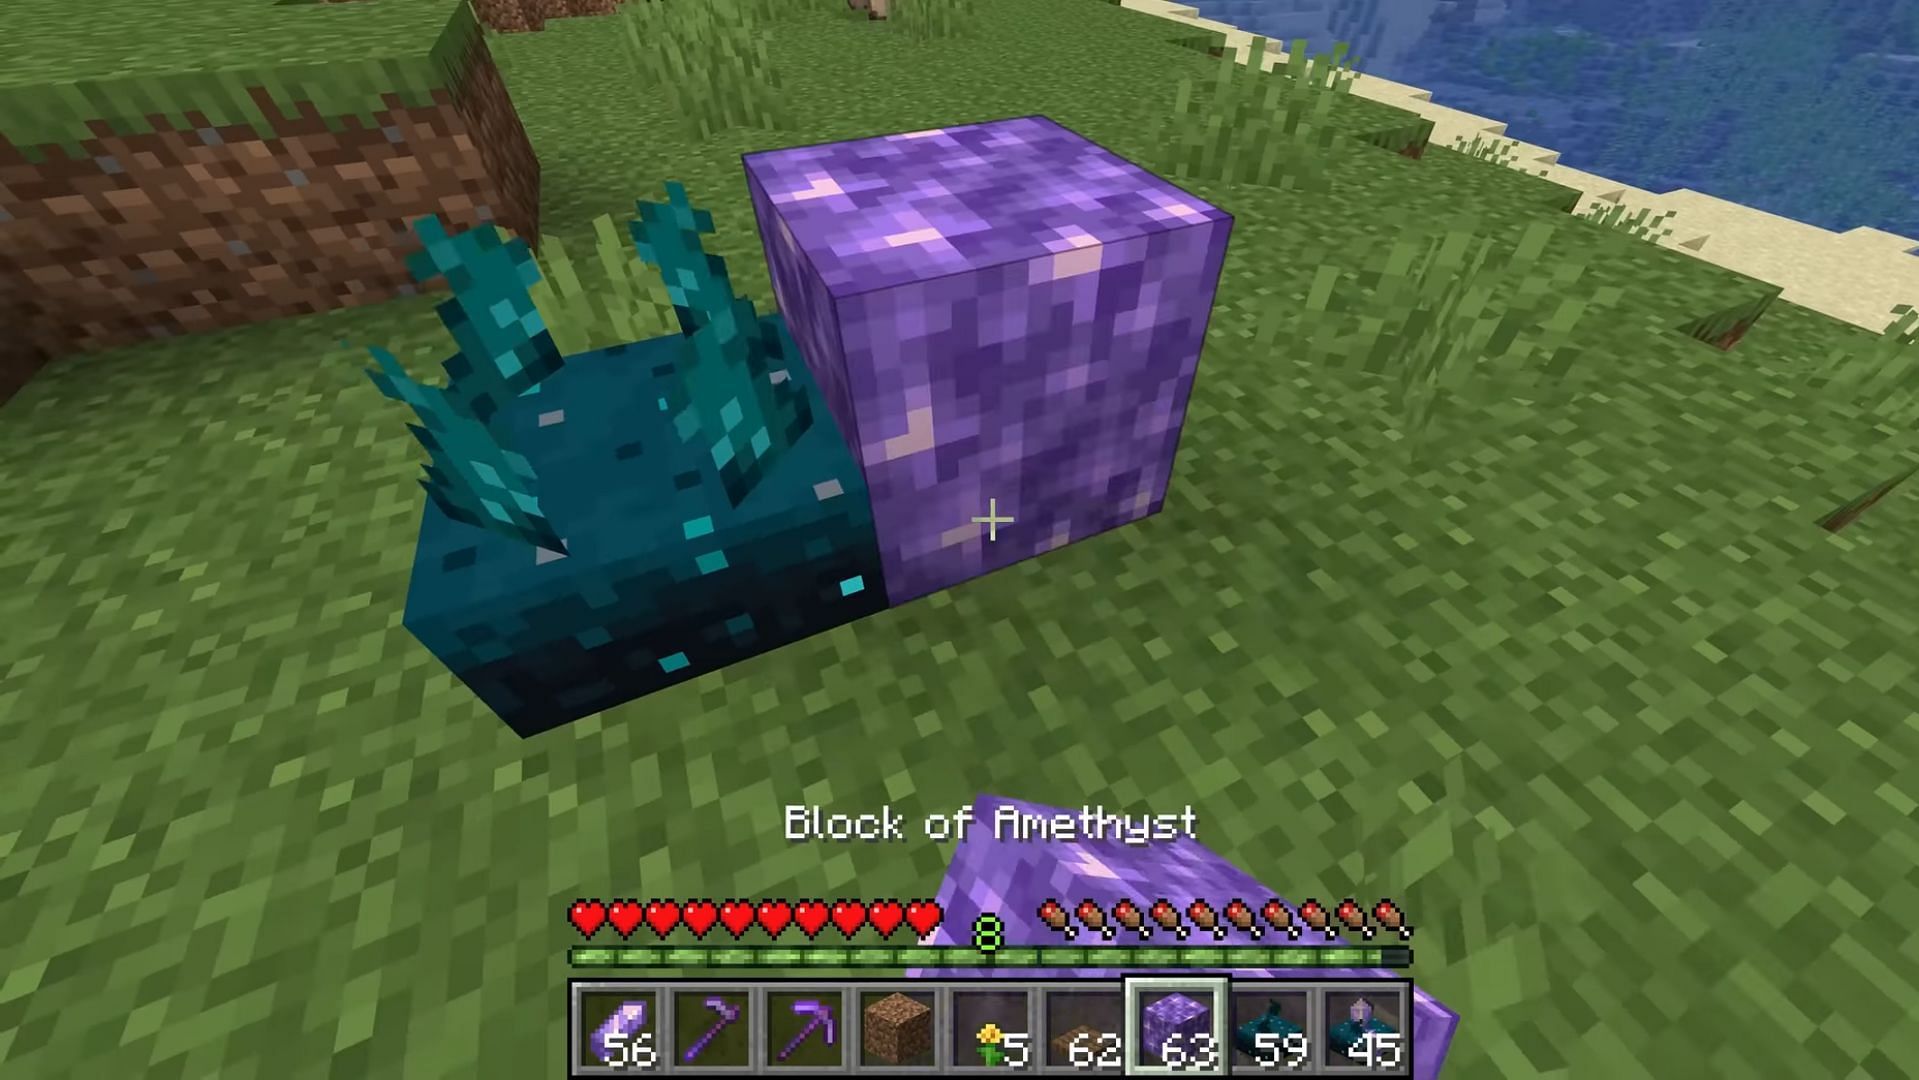 Block of amethyst preserves the vibration signal sent by sculk sensor in Minecraft 1.20 update (Image via Mojang)